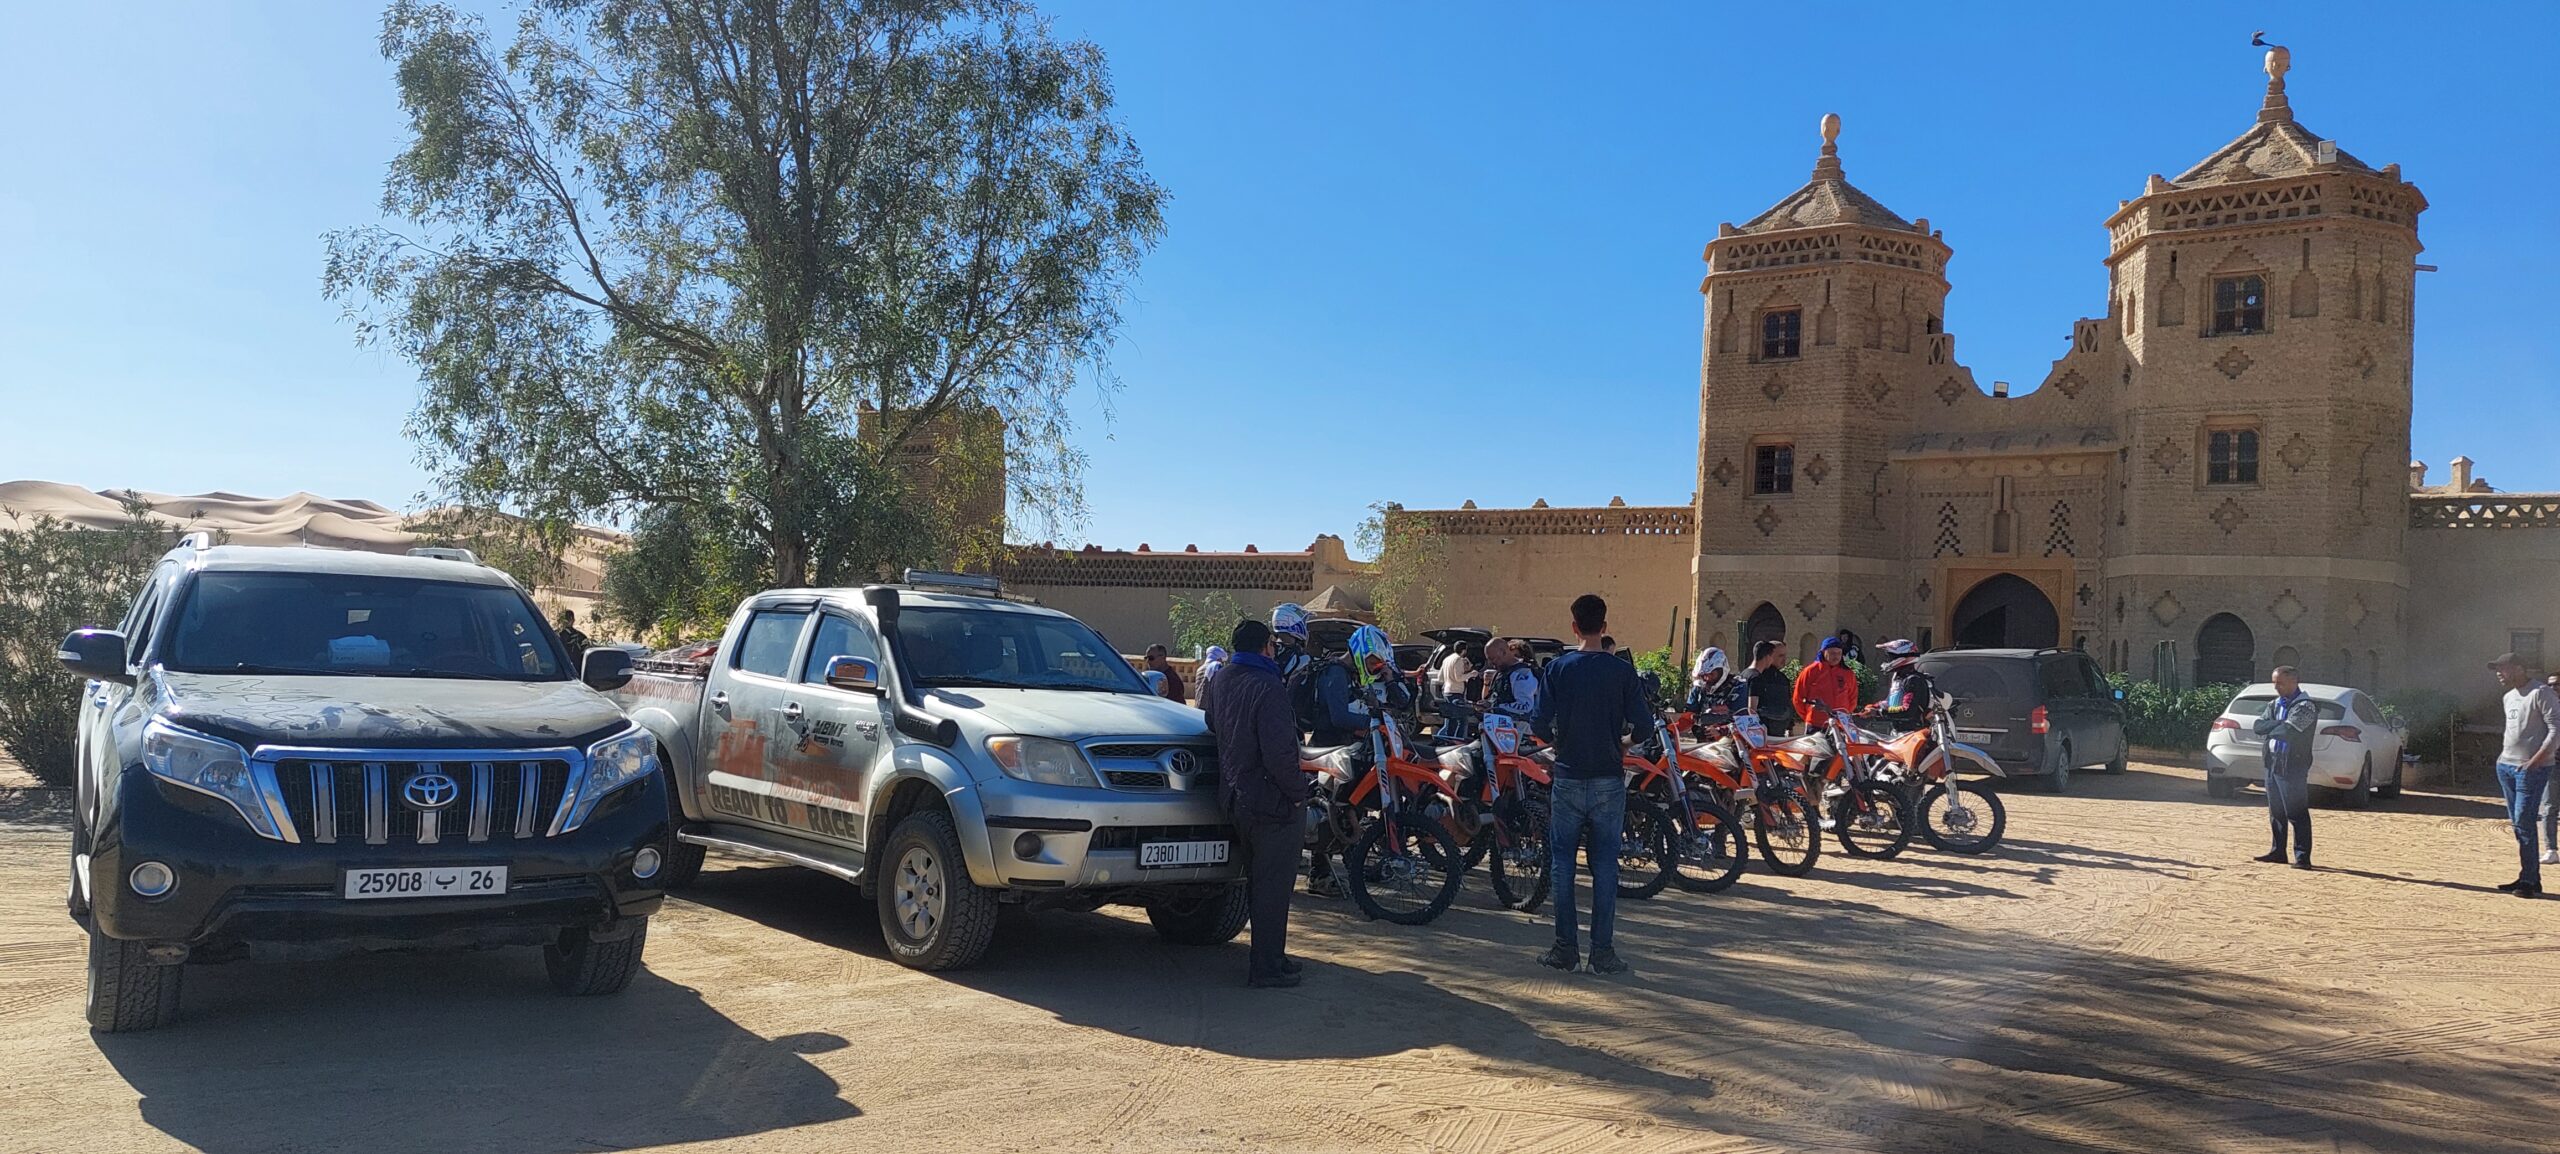 Rallye Raid assistance in Morocco 